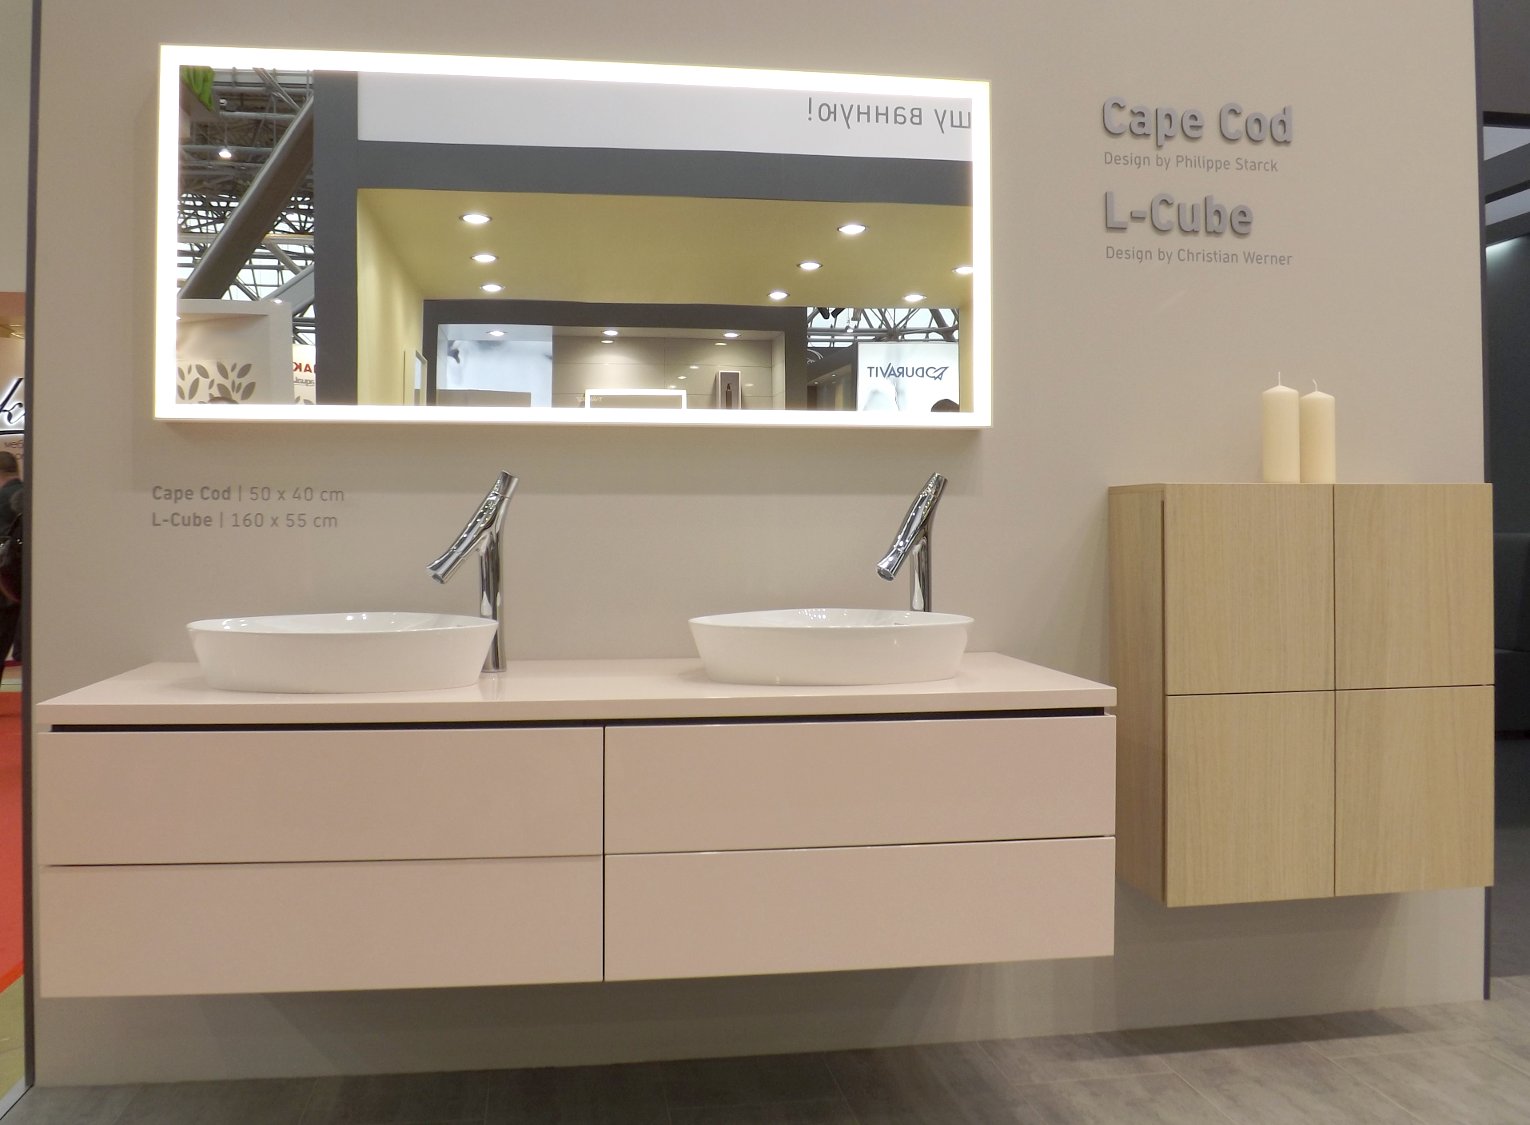 Мебель для ванной и зеркало L-Cube с раковинами-чашами Cape Cod от Duravit на выставке МосБилд 2015. Вид А